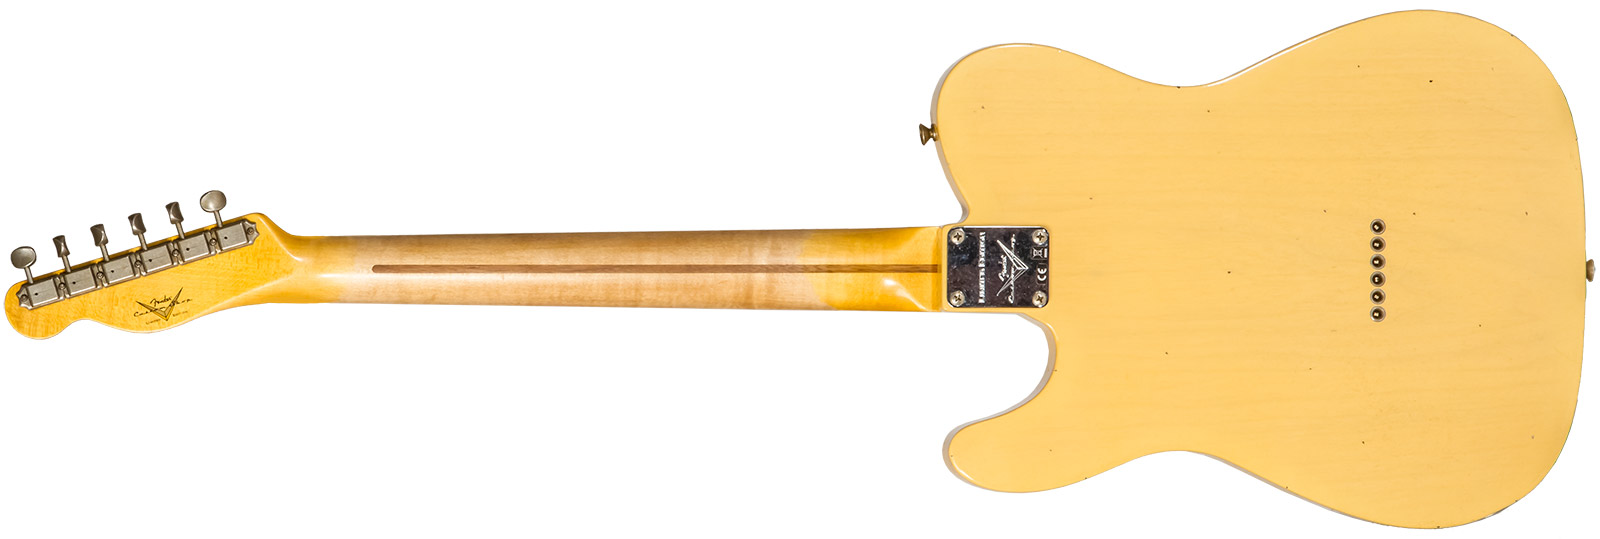 Fender Custom Shop Tele 1953 2s Ht Mn #r128606 - Journeyman Relic Aged Nocaster Blonde - Televorm elektrische gitaar - Variation 1